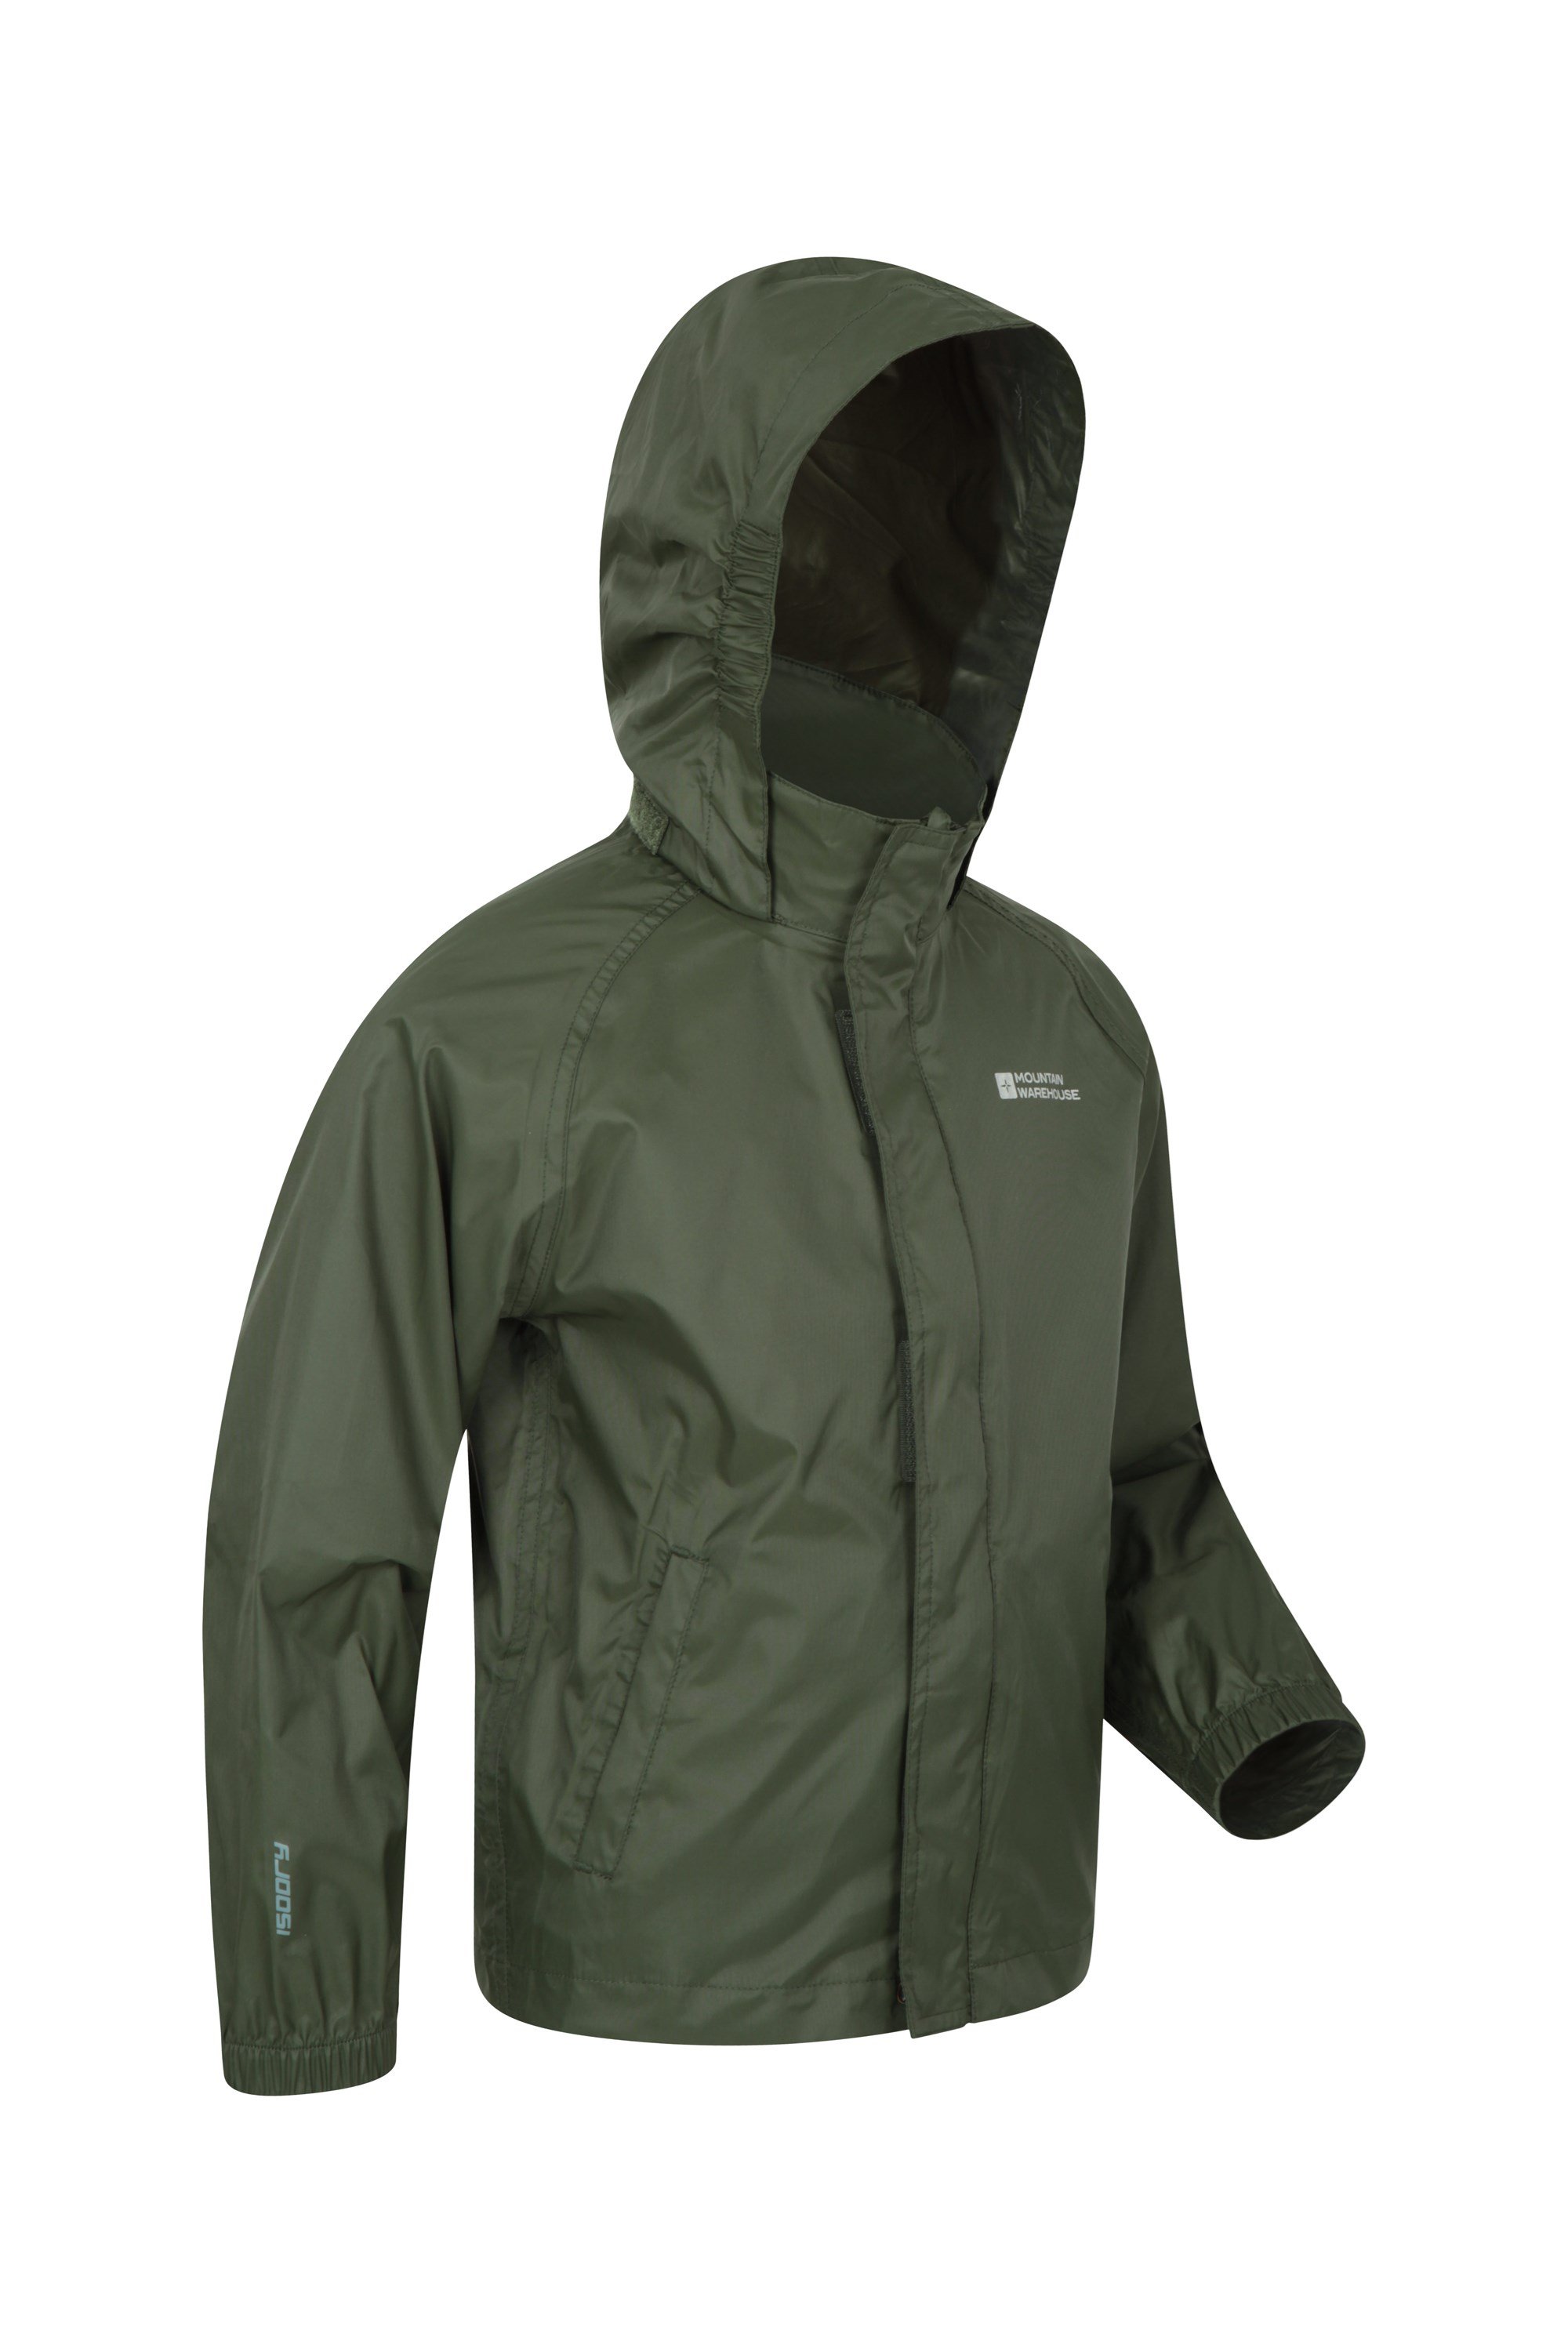 School Wind Resistant for Wet Weather Mountain Warehouse Pakka Kids Waterproof Jacket Travel Lightweight & Breathable Rain Coat for Girls & Boys with Packaway Bag 